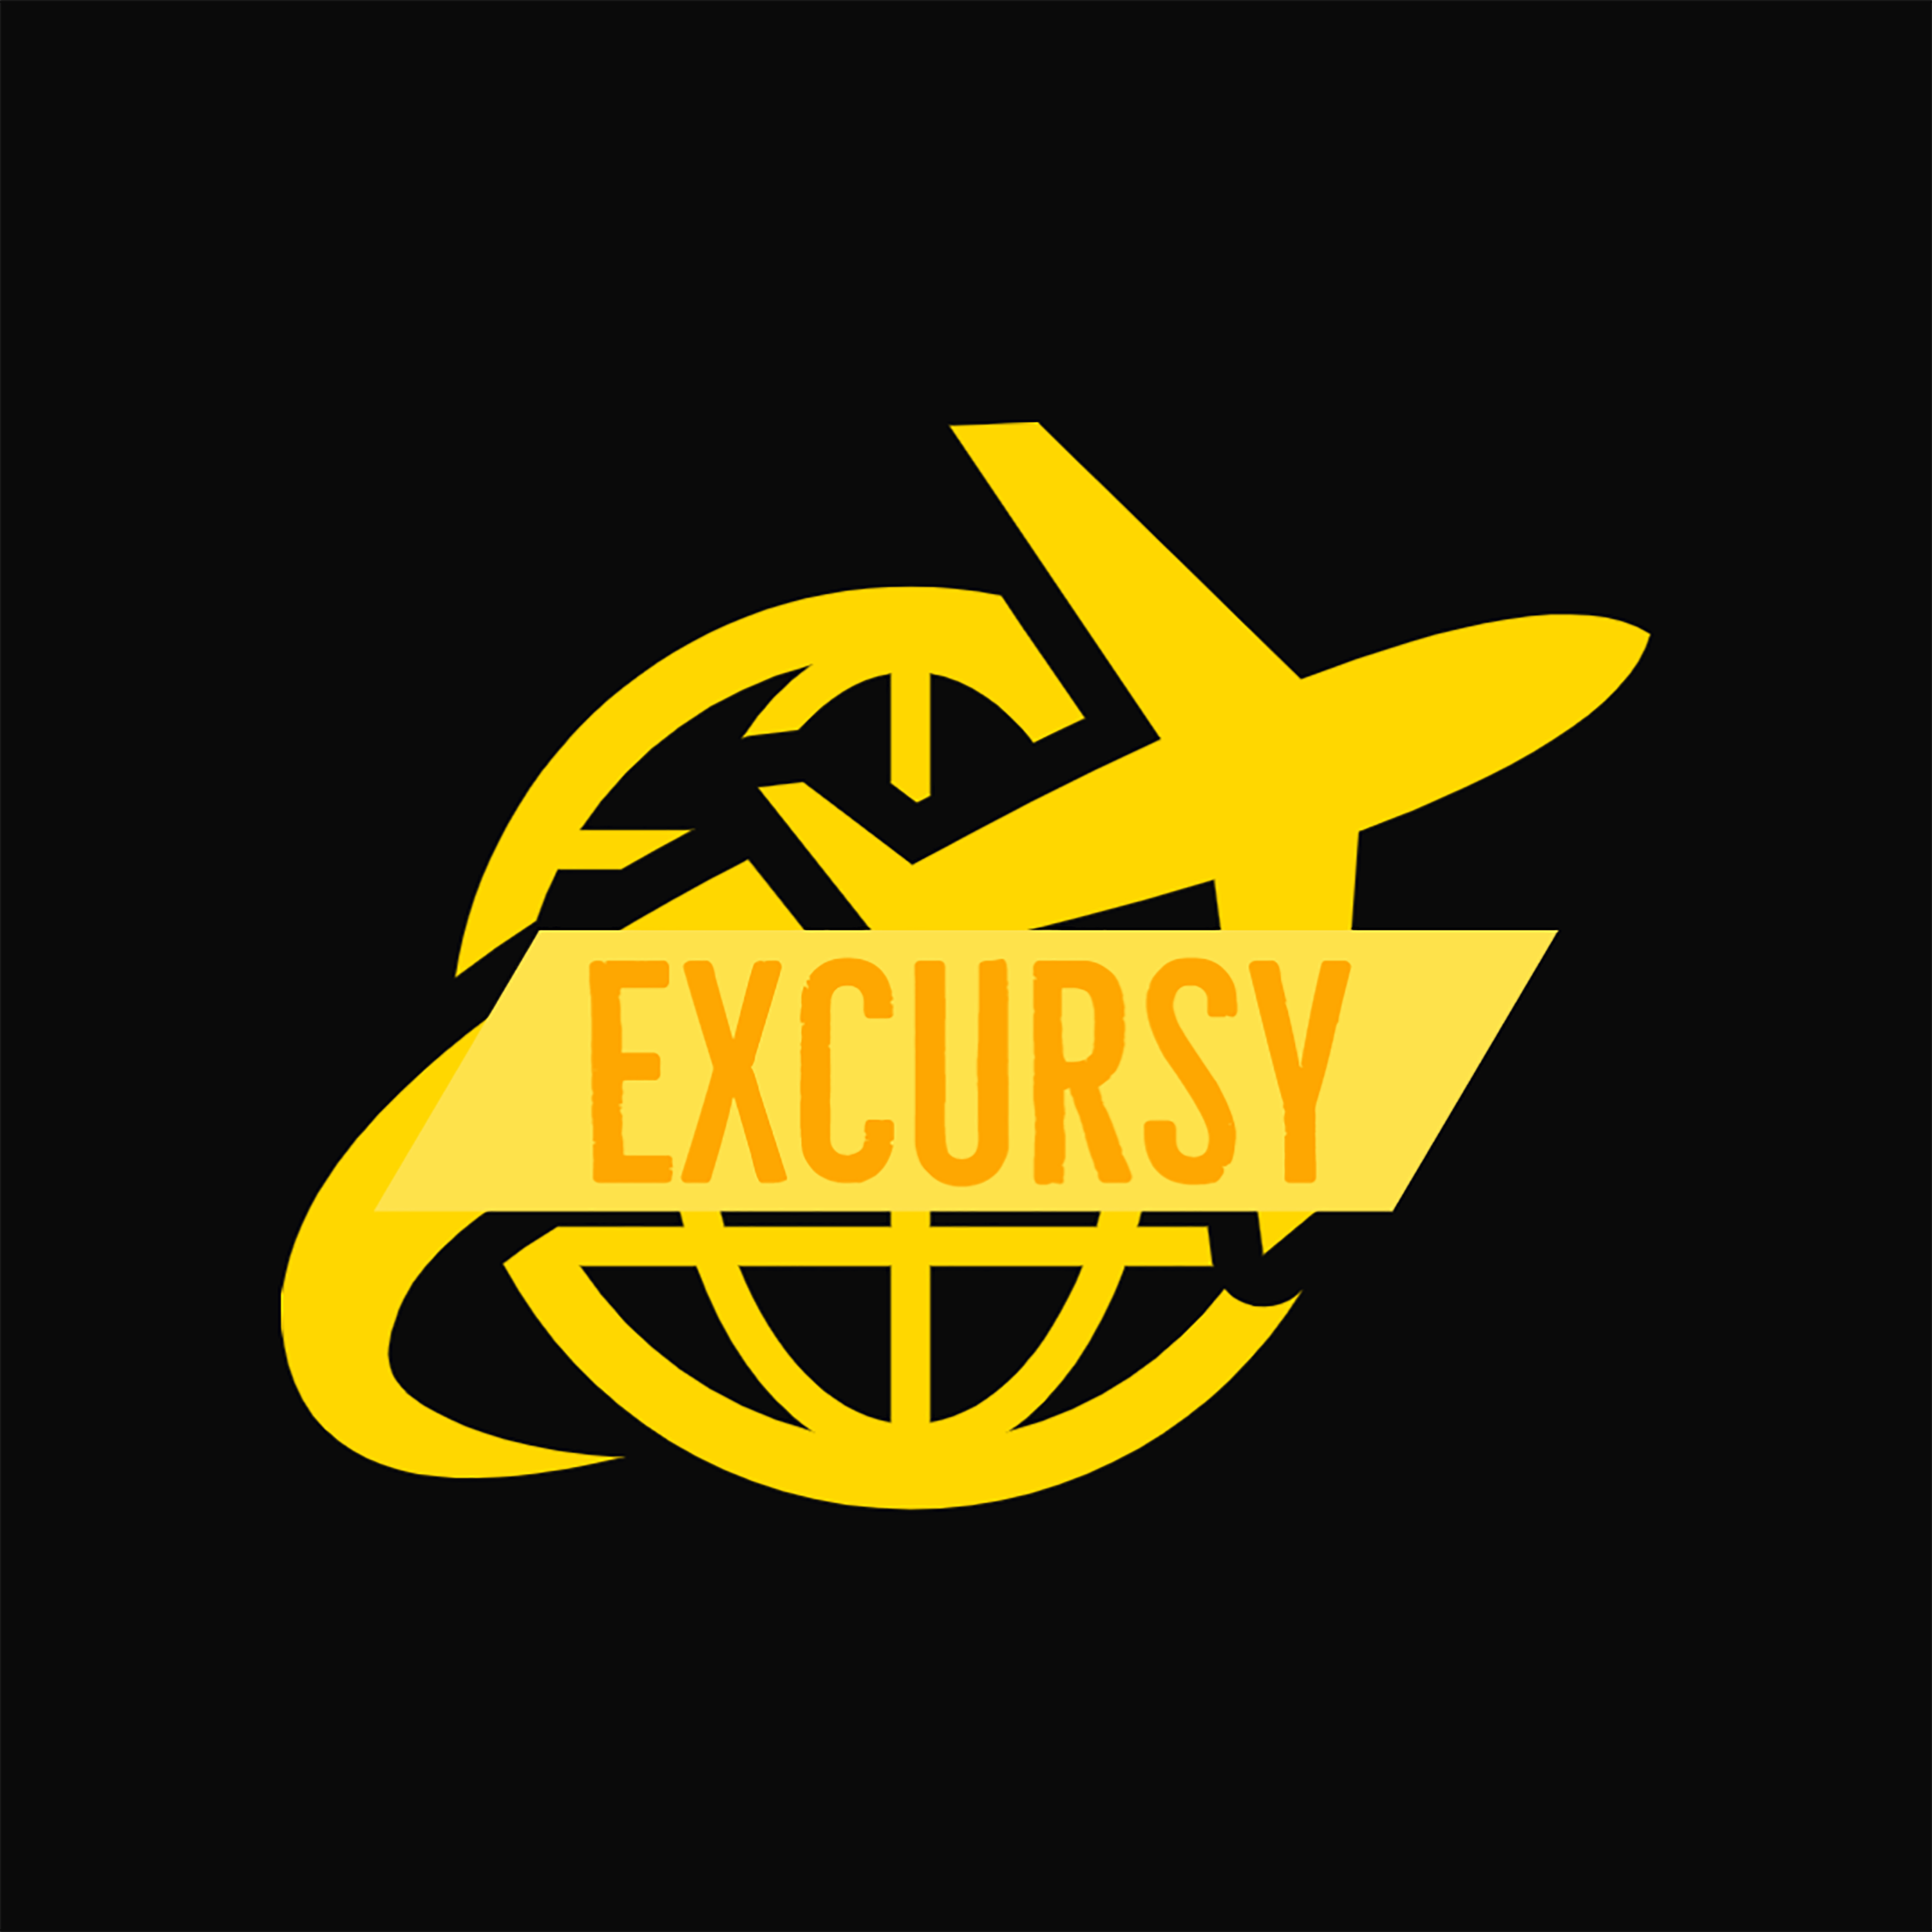 EXCURSY logo